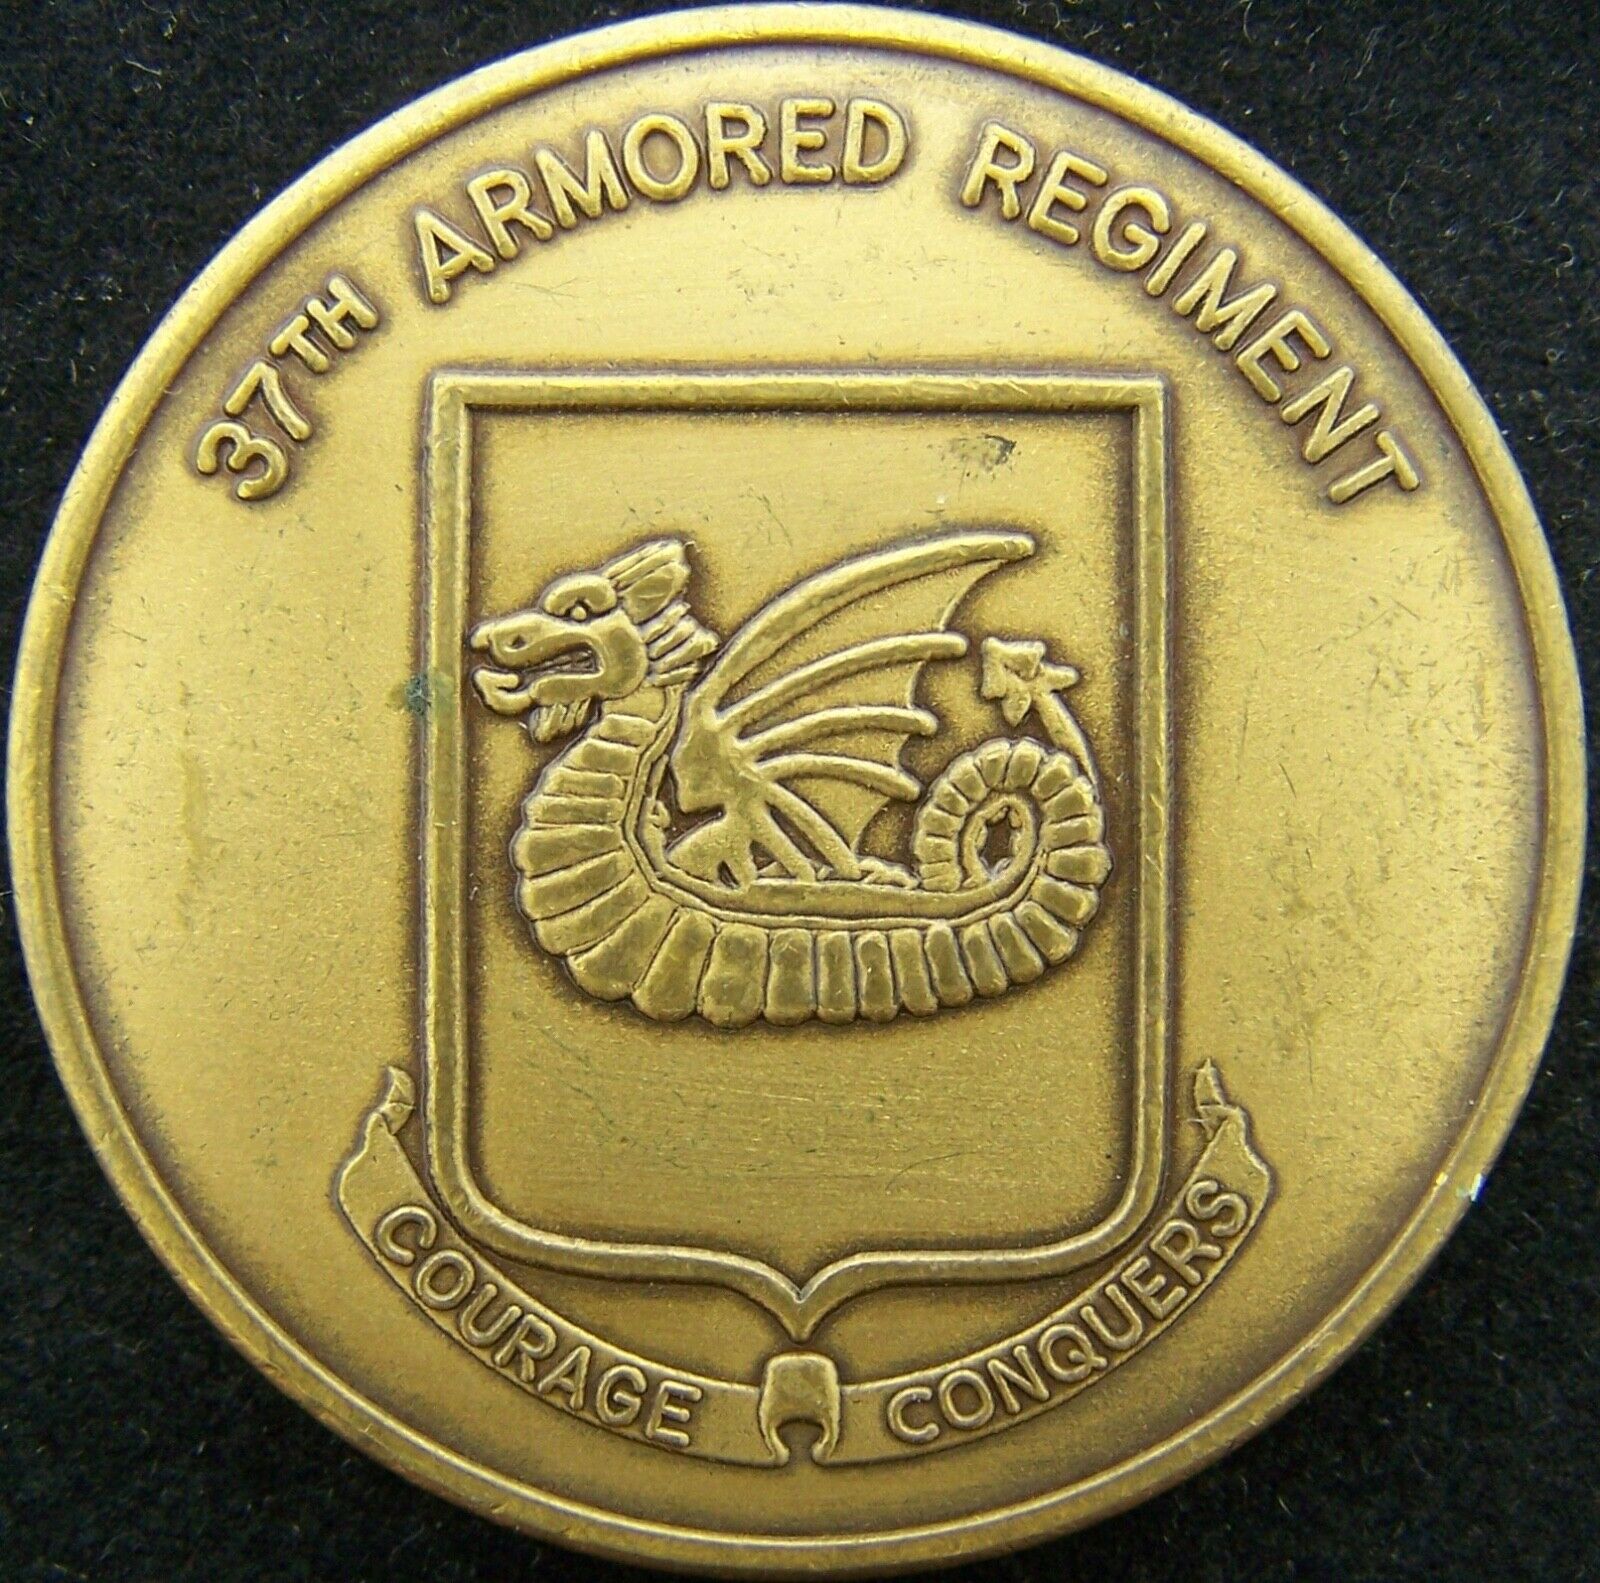 37th Armored Regiment Vintage Challenge Coin